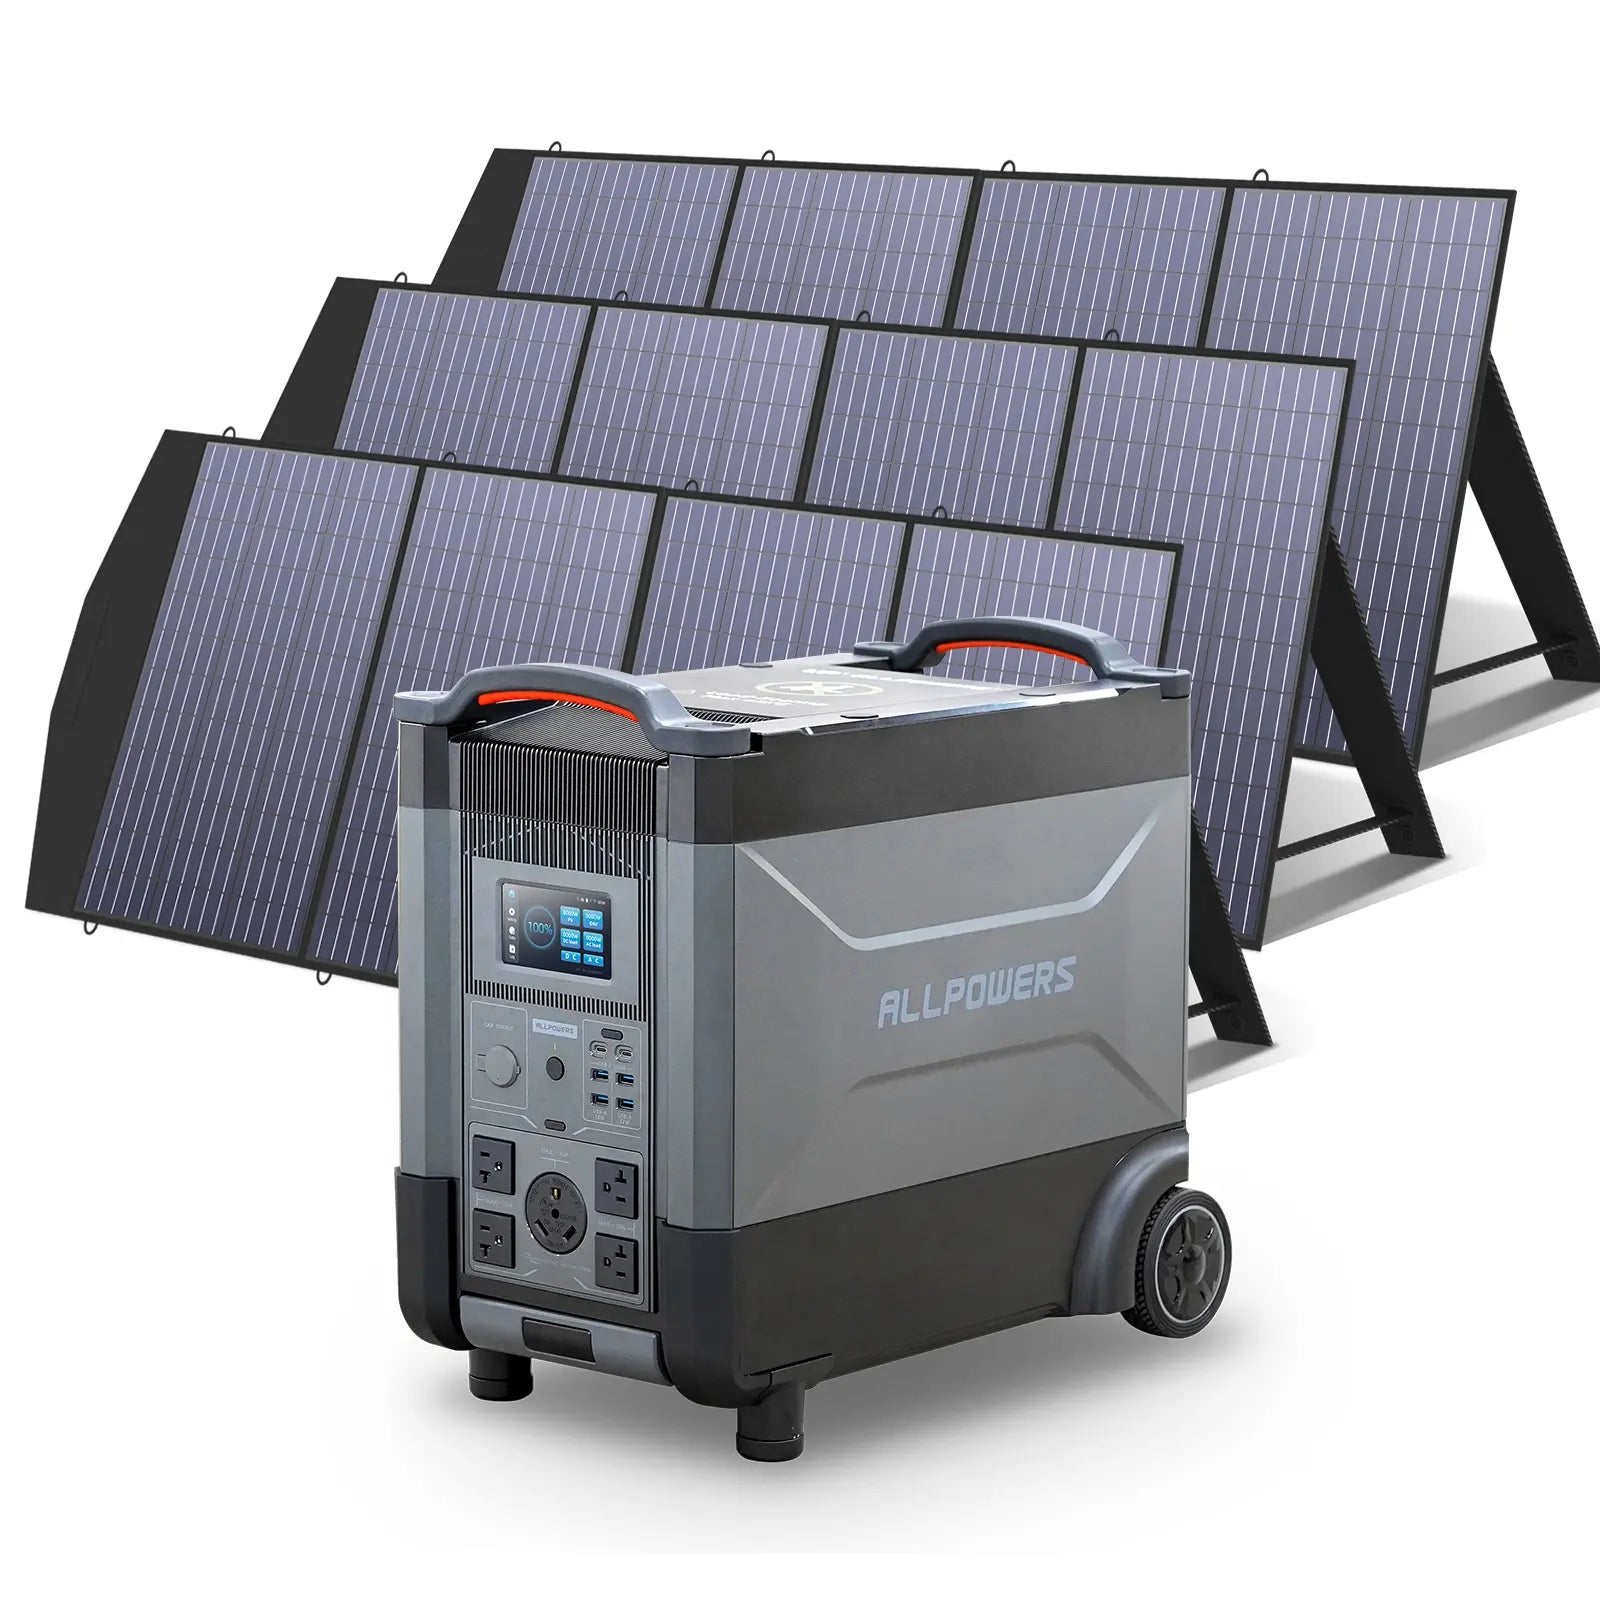 ALLPOWERS Solar Generator Kit 4000W (R4000 + 3 x SP033 200W Solar Panel)